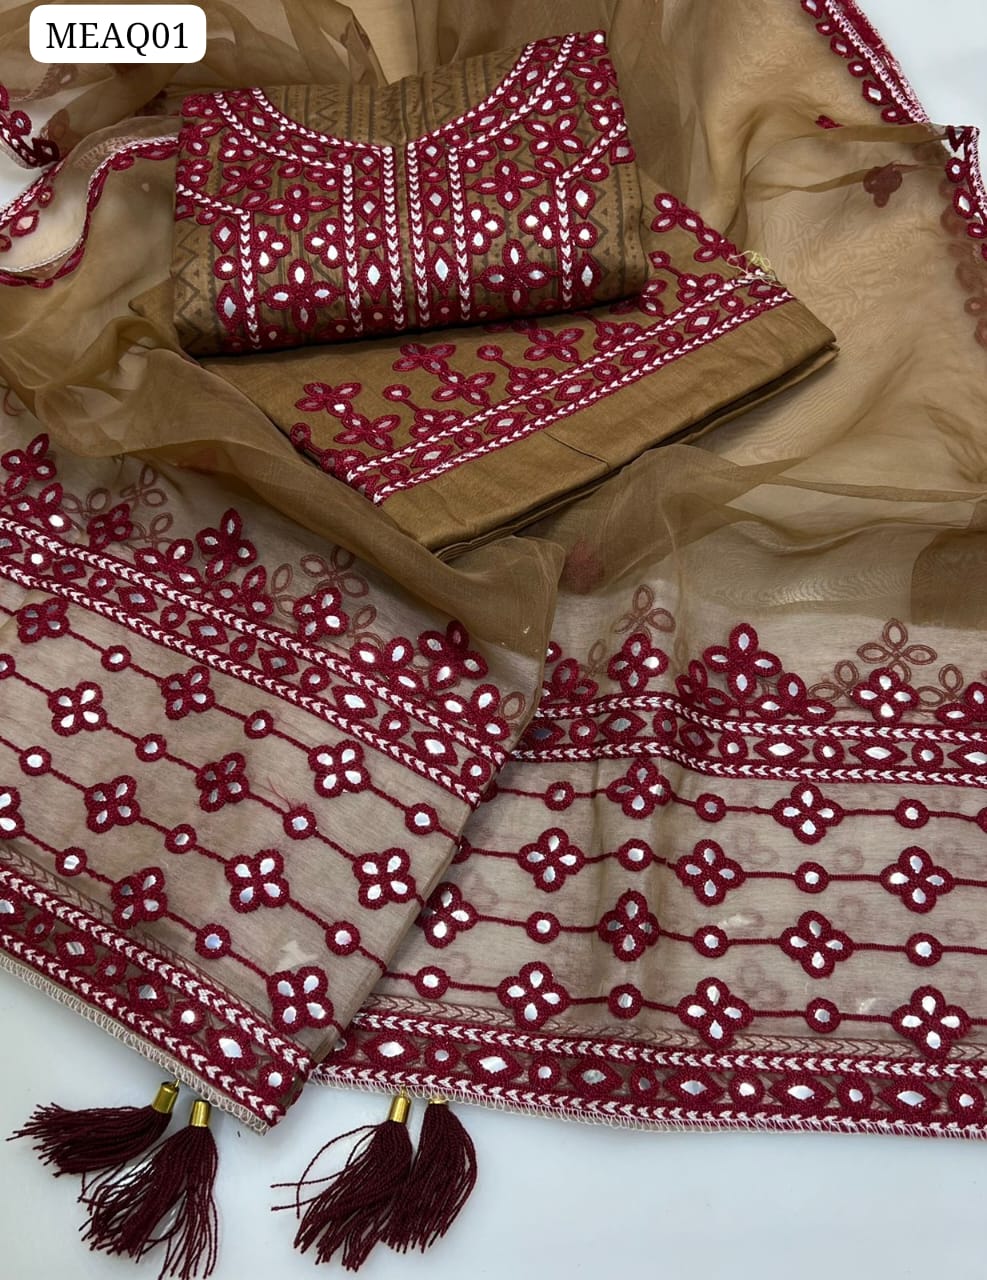 Lawn Cotton Fabric Karhai Ari 9Mm Embroidery Work Shirt And Organza Karhai 4 Said Embroidery Work Dupatta And Lawn Cotton Karhai Ari 9Mm Embroidery Work Trouser 3Pc Dress